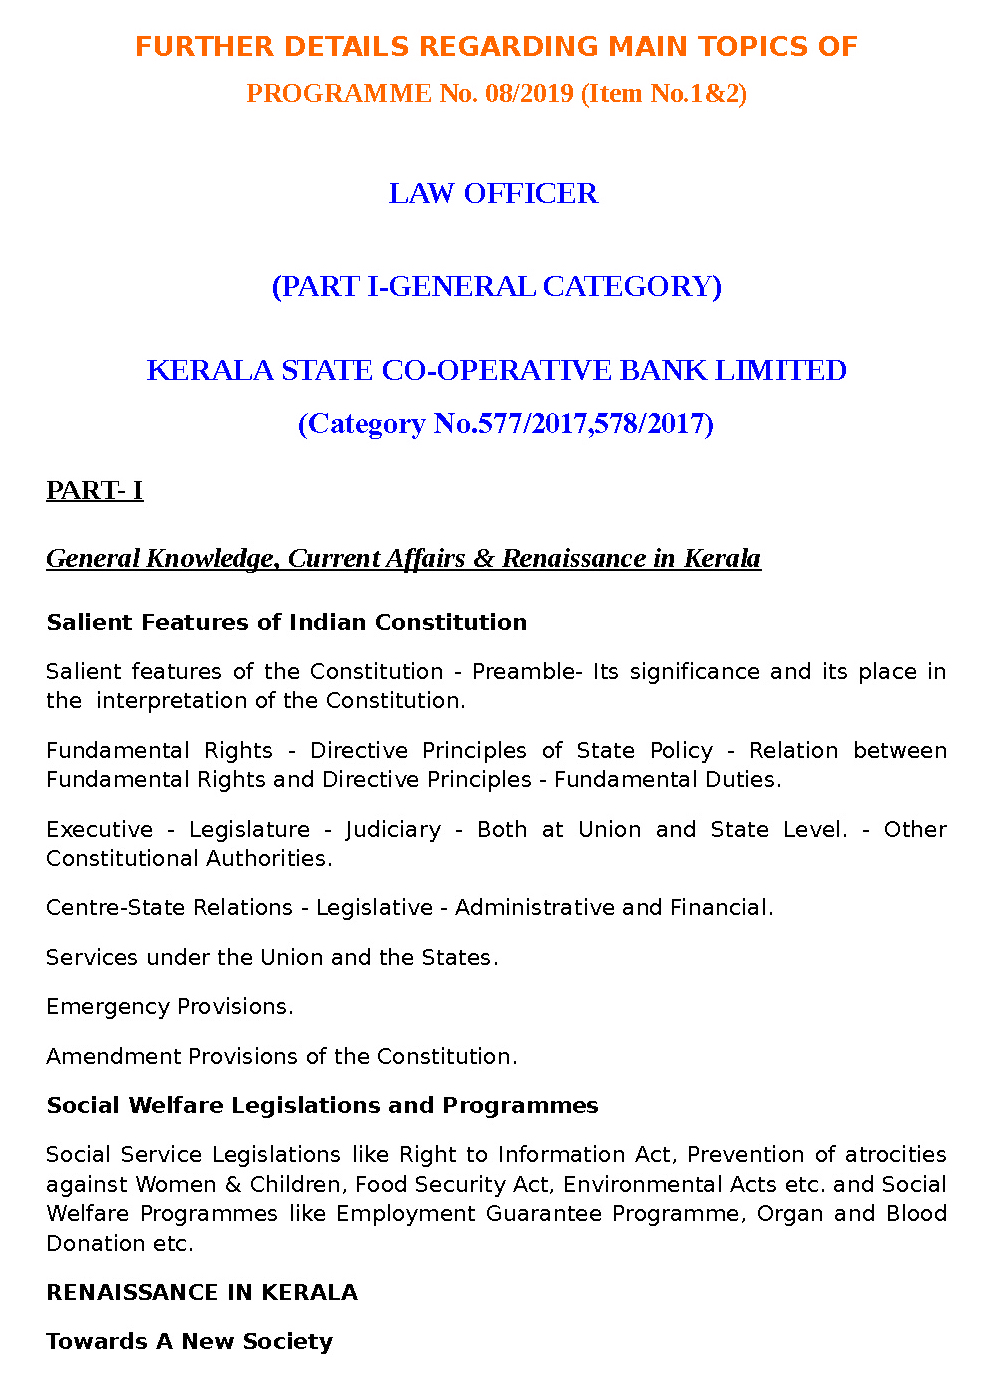 Kerala PSC Syllabus 2019 Law Officer - Notification Image 1